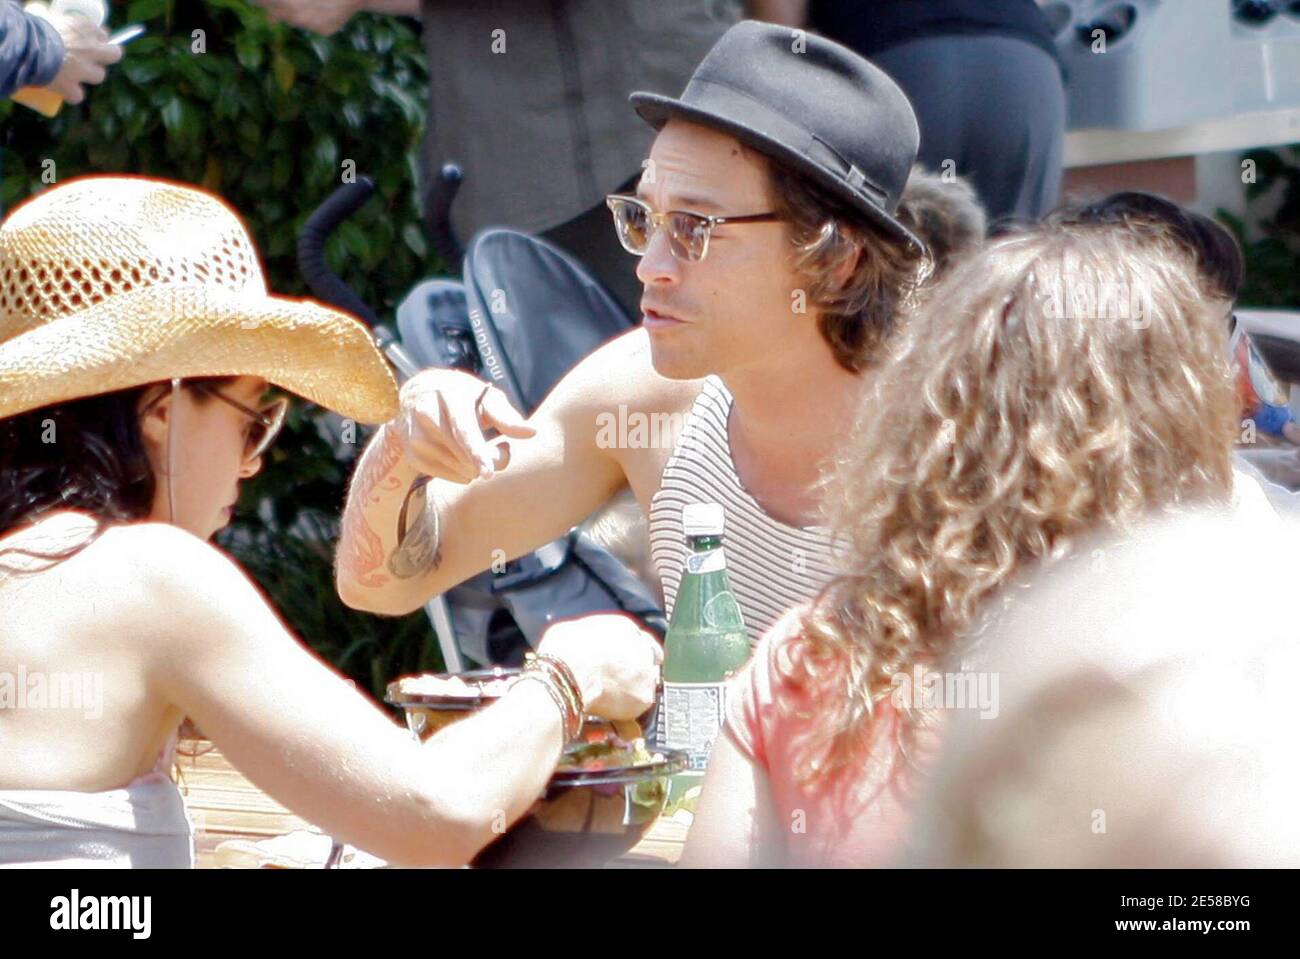 Exclusive!! Incubus lead singer Brandon Boyd has lunch in Malibu. Los Angeles, Calif. 7/6/07.   [[laj]] Stock Photo